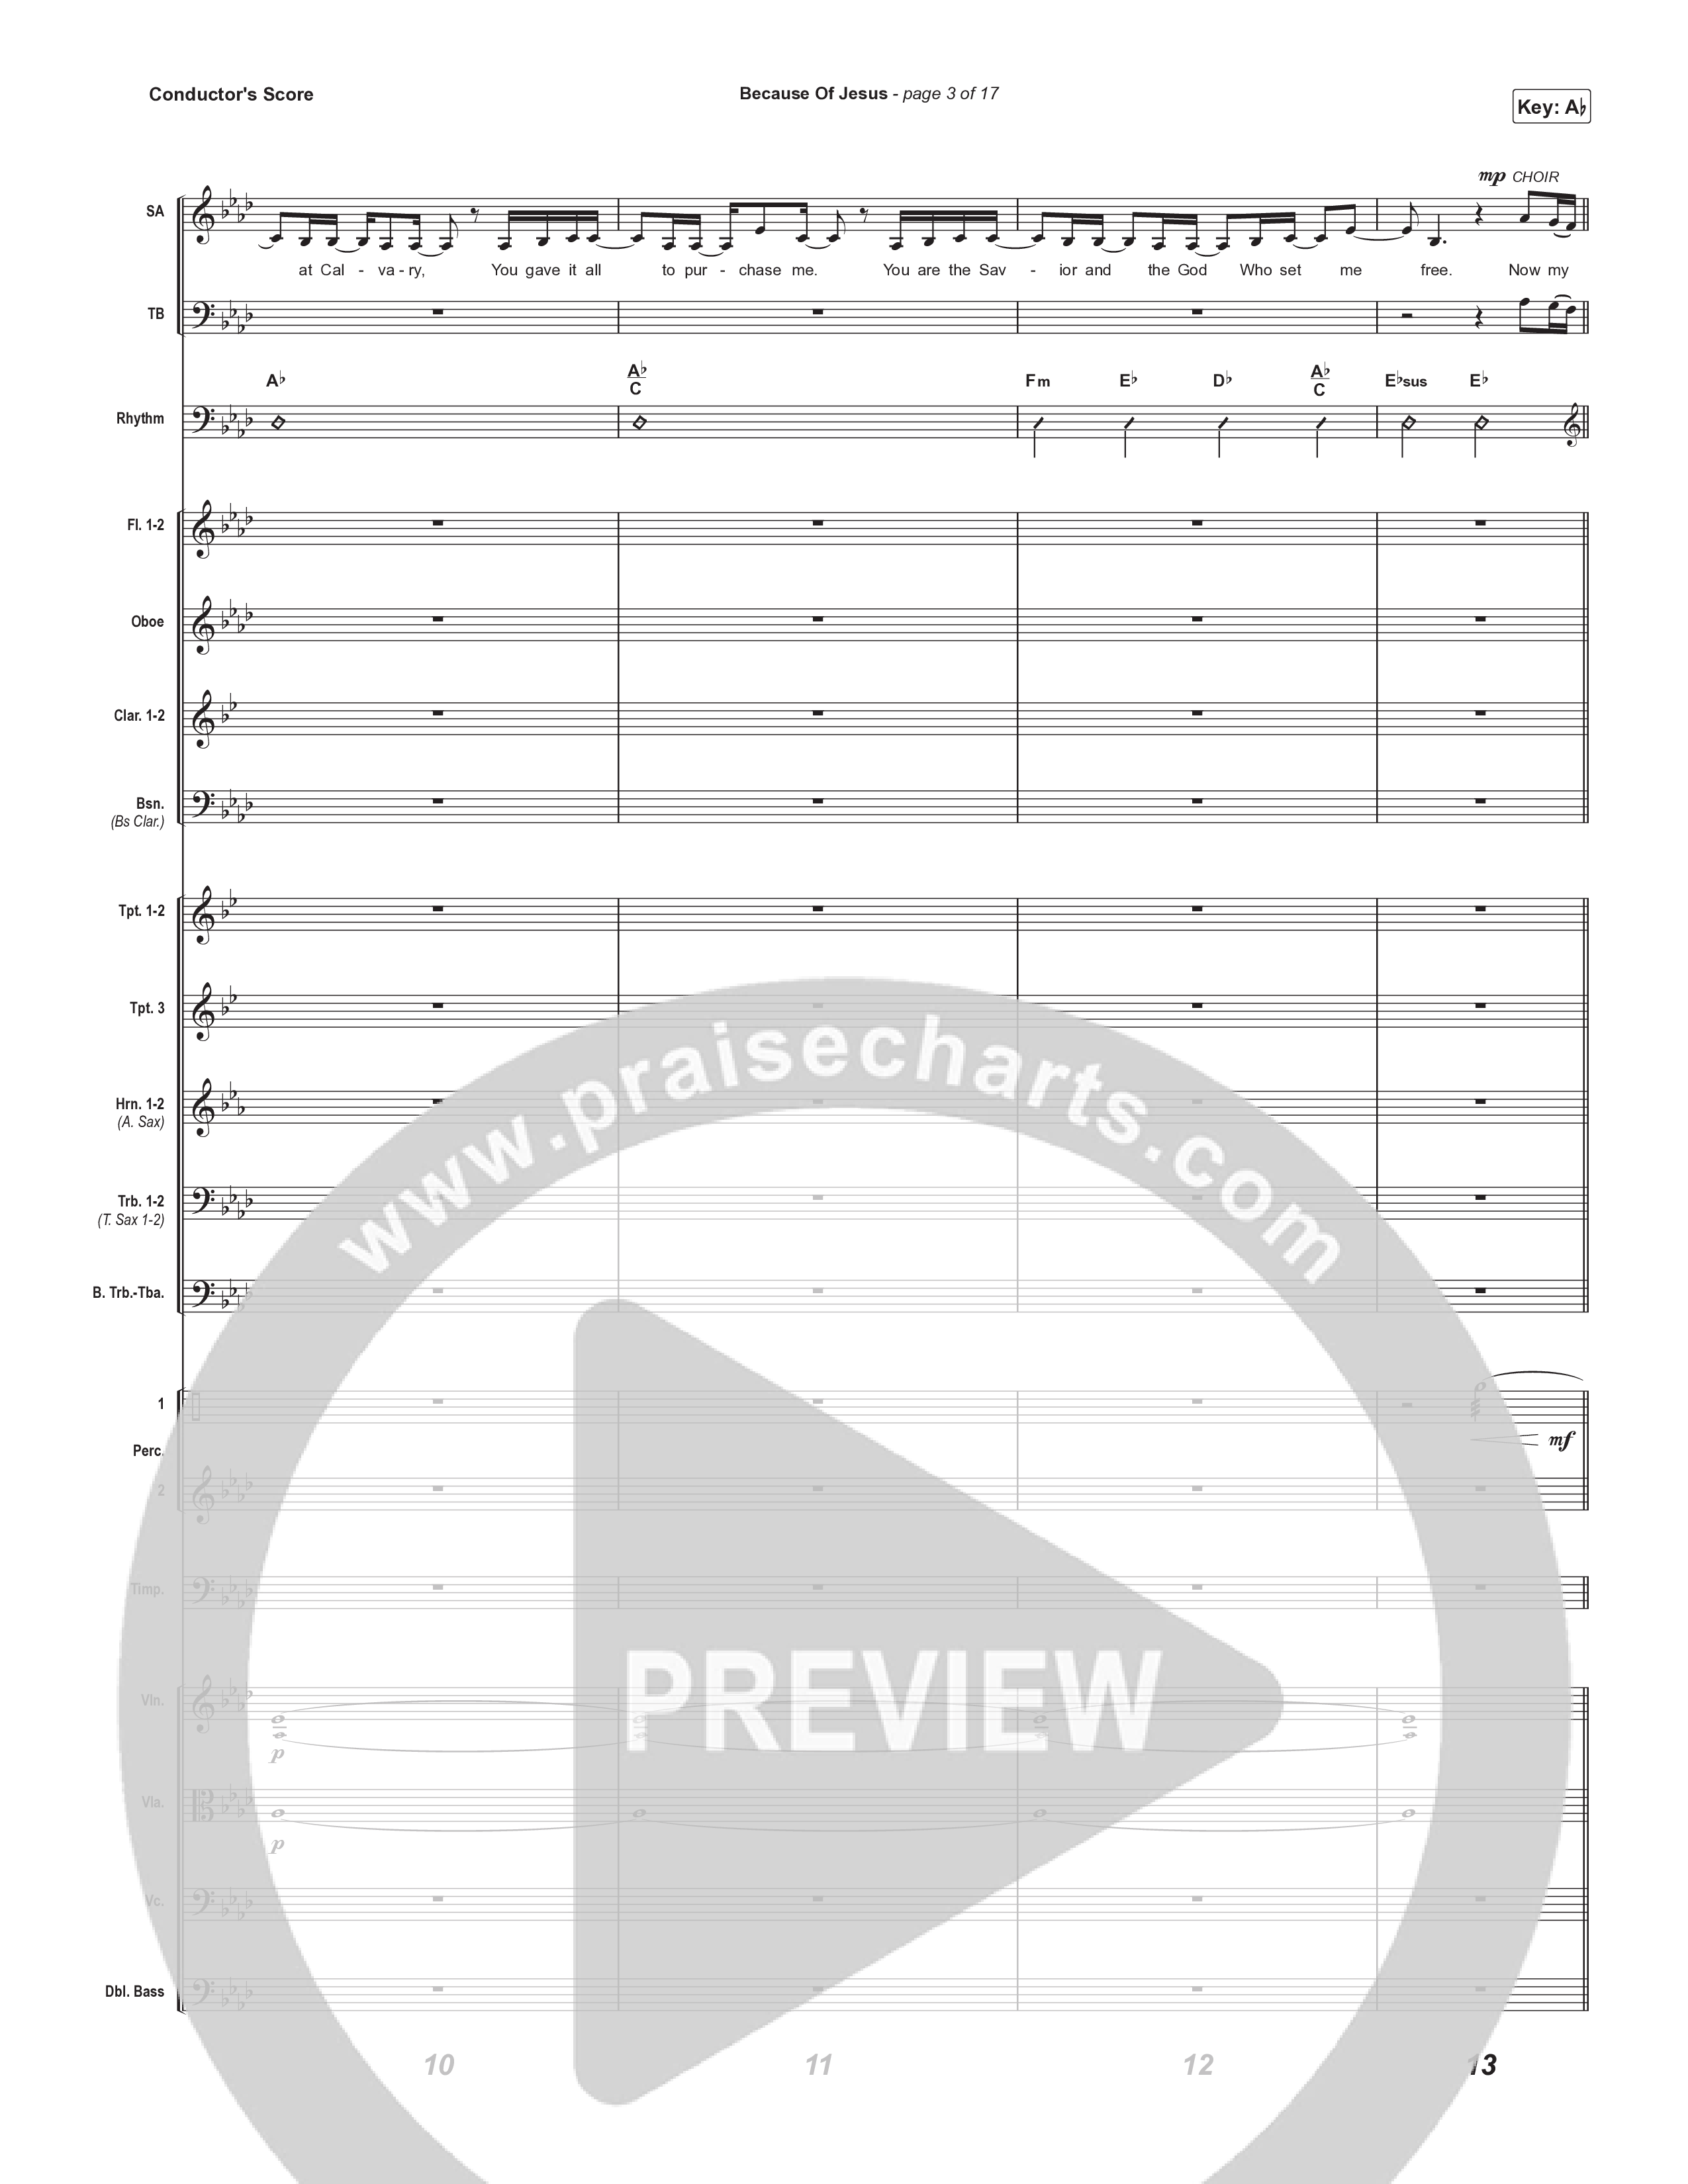 Because Of Jesus (Worship Choir/SAB) Conductor's Score (Charity Gayle / Arr. Luke Gambill)